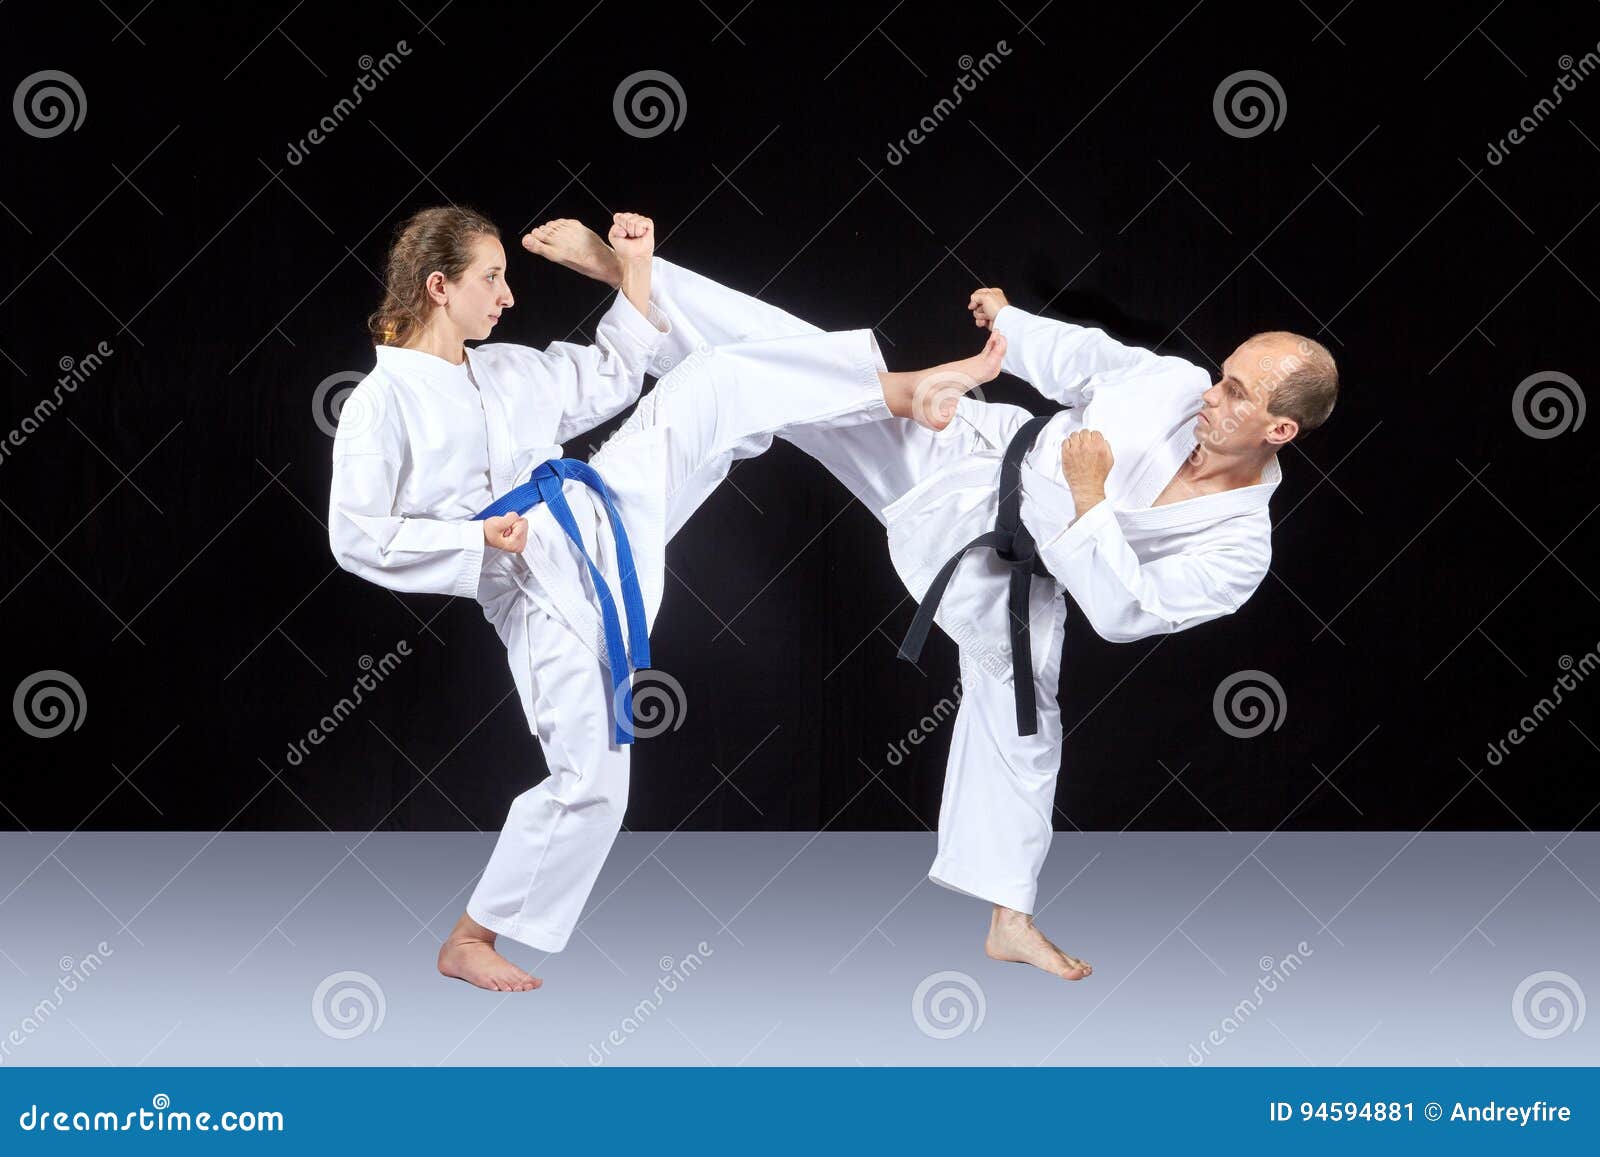 Semi Contact Karate